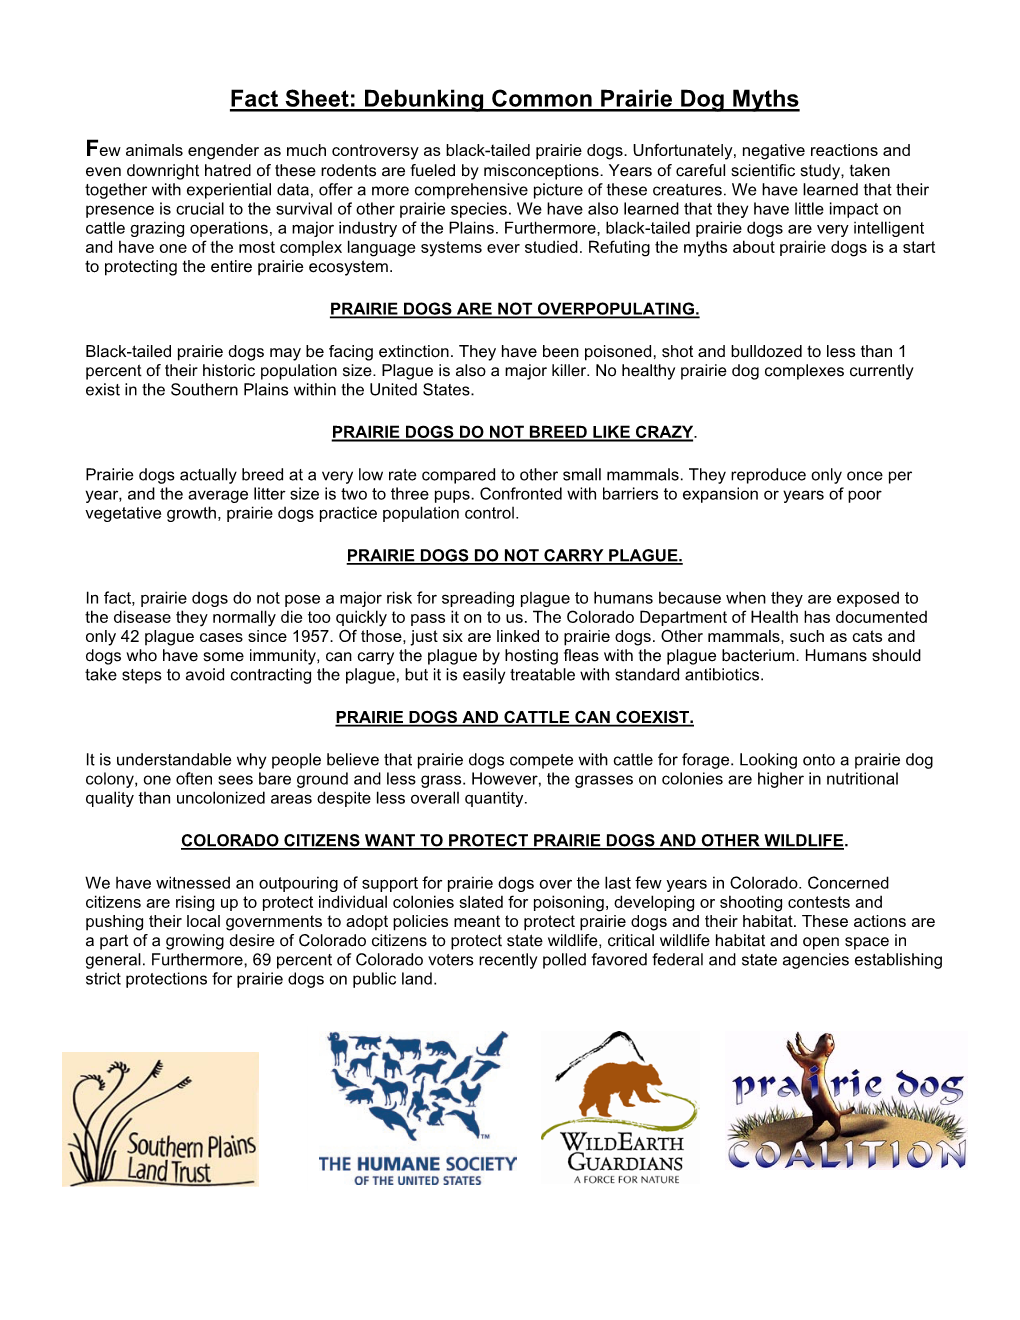 Fact Sheet #1: Debunking Common Prairie Dog Myths